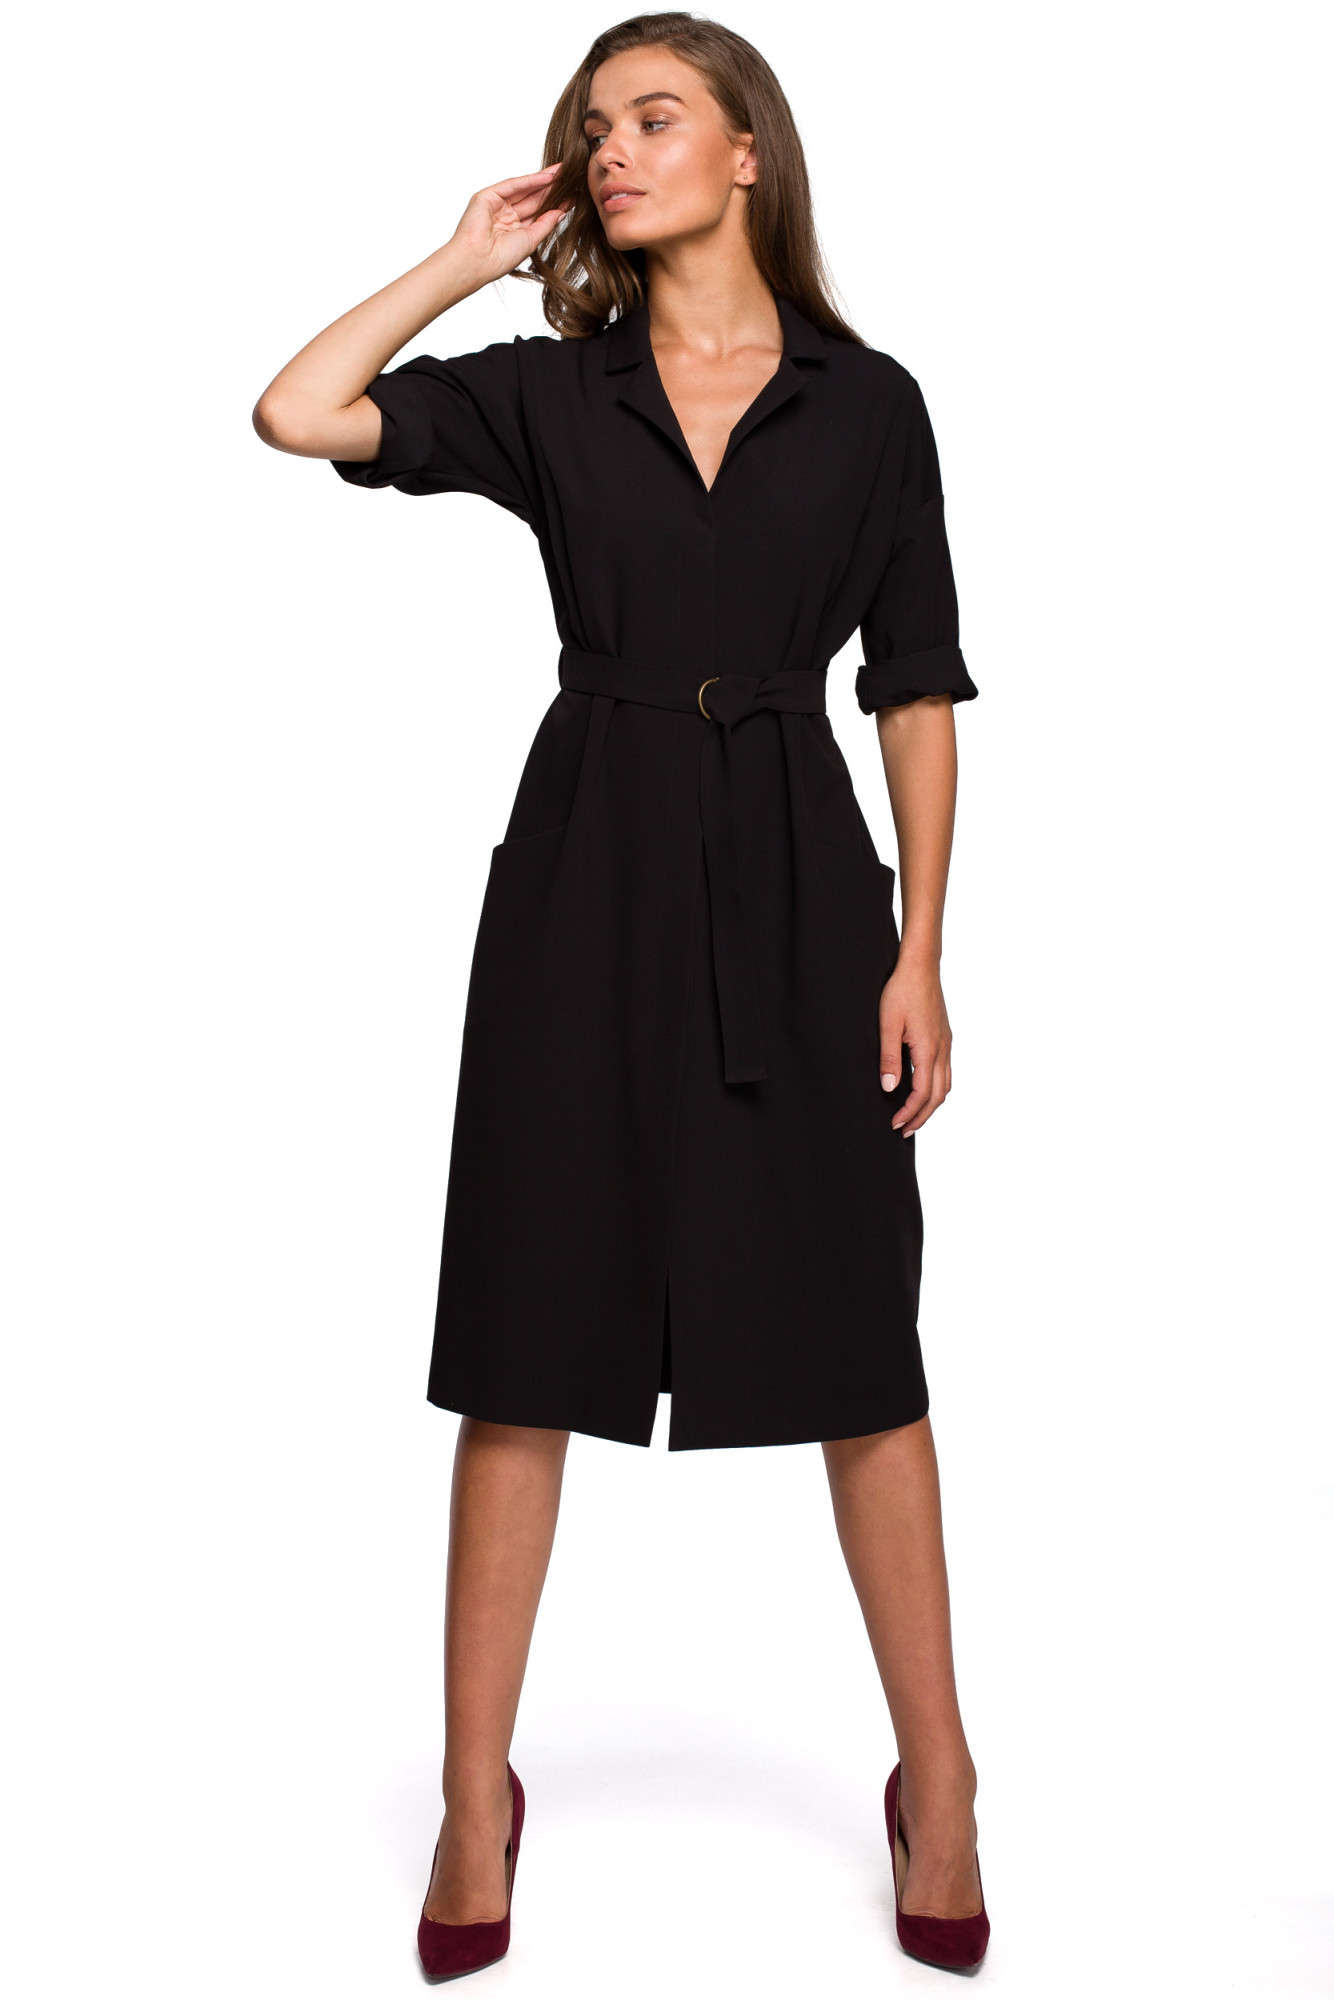 Stylove Dress S230 Black XL